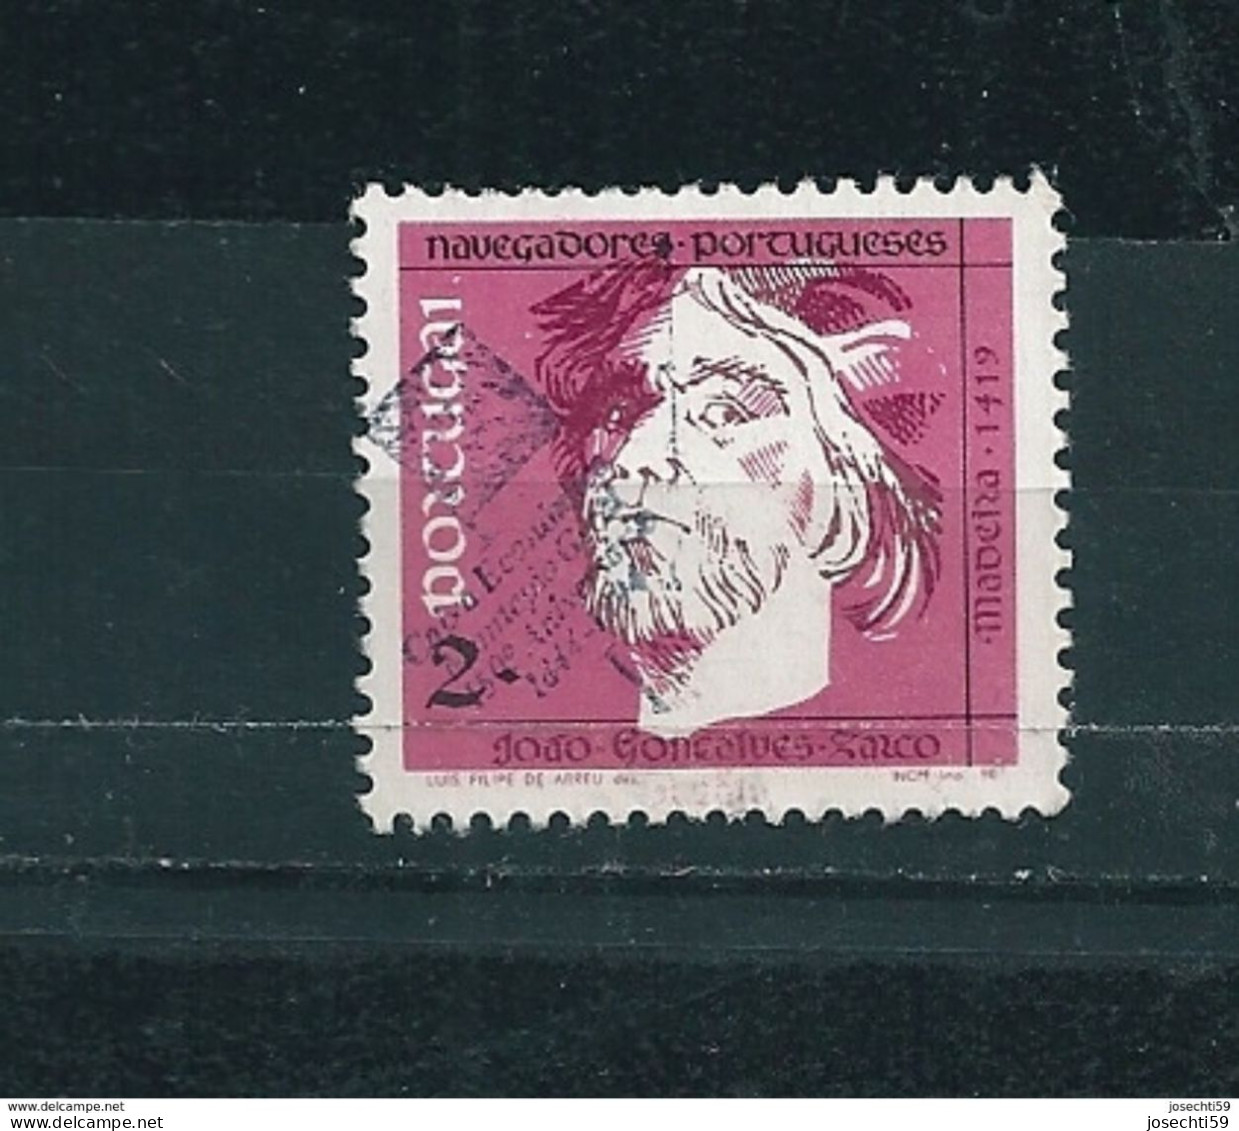 N° 1794 Navigateurs Portugais Joao Gonçalves Zarco (Madère ) 2e Timbre Portugal 1990 - Used Stamps